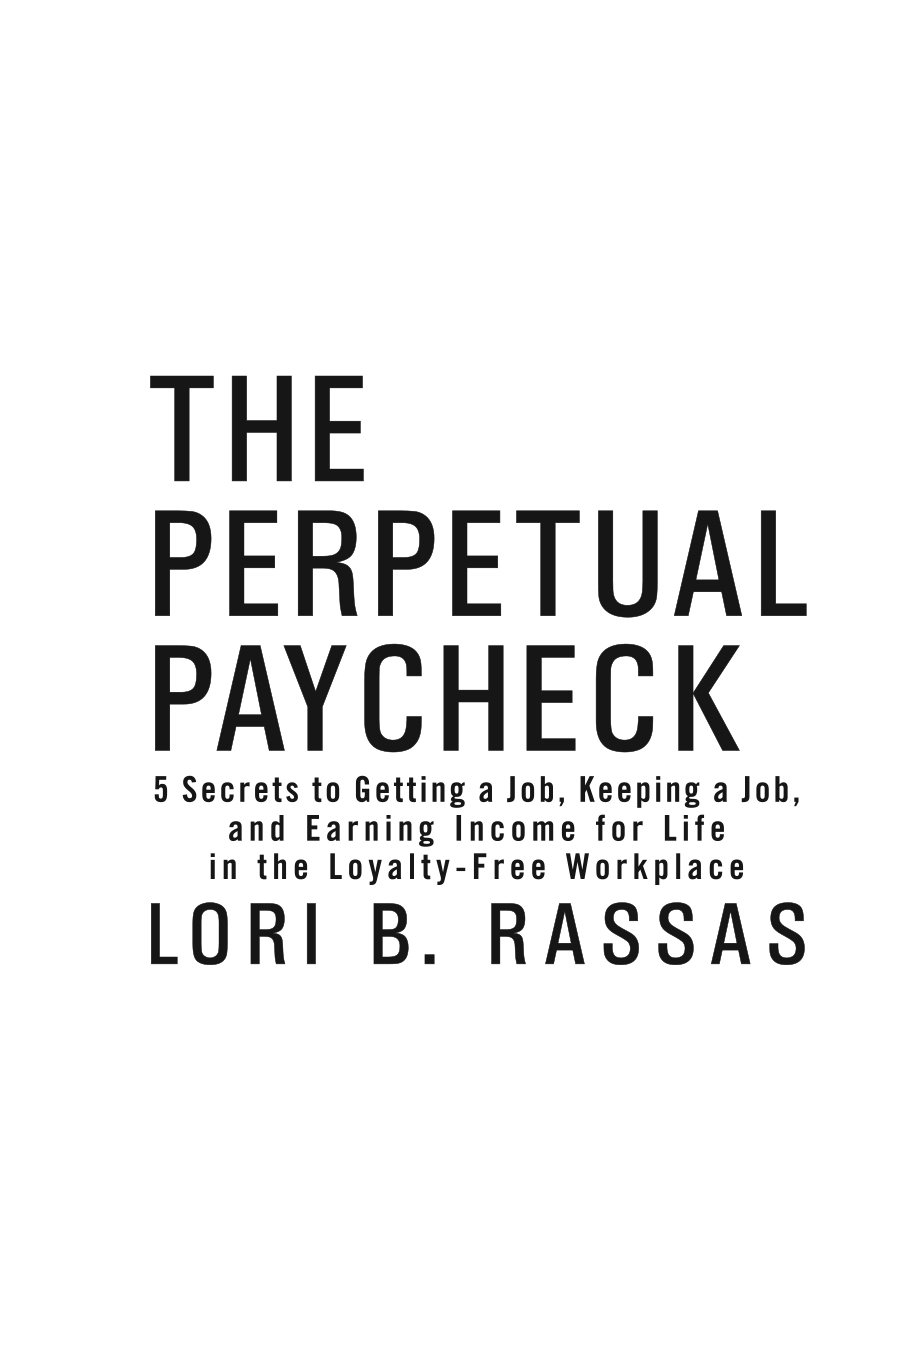 Perpetual paycheck - PRINT READY-Apr14-1.jpg